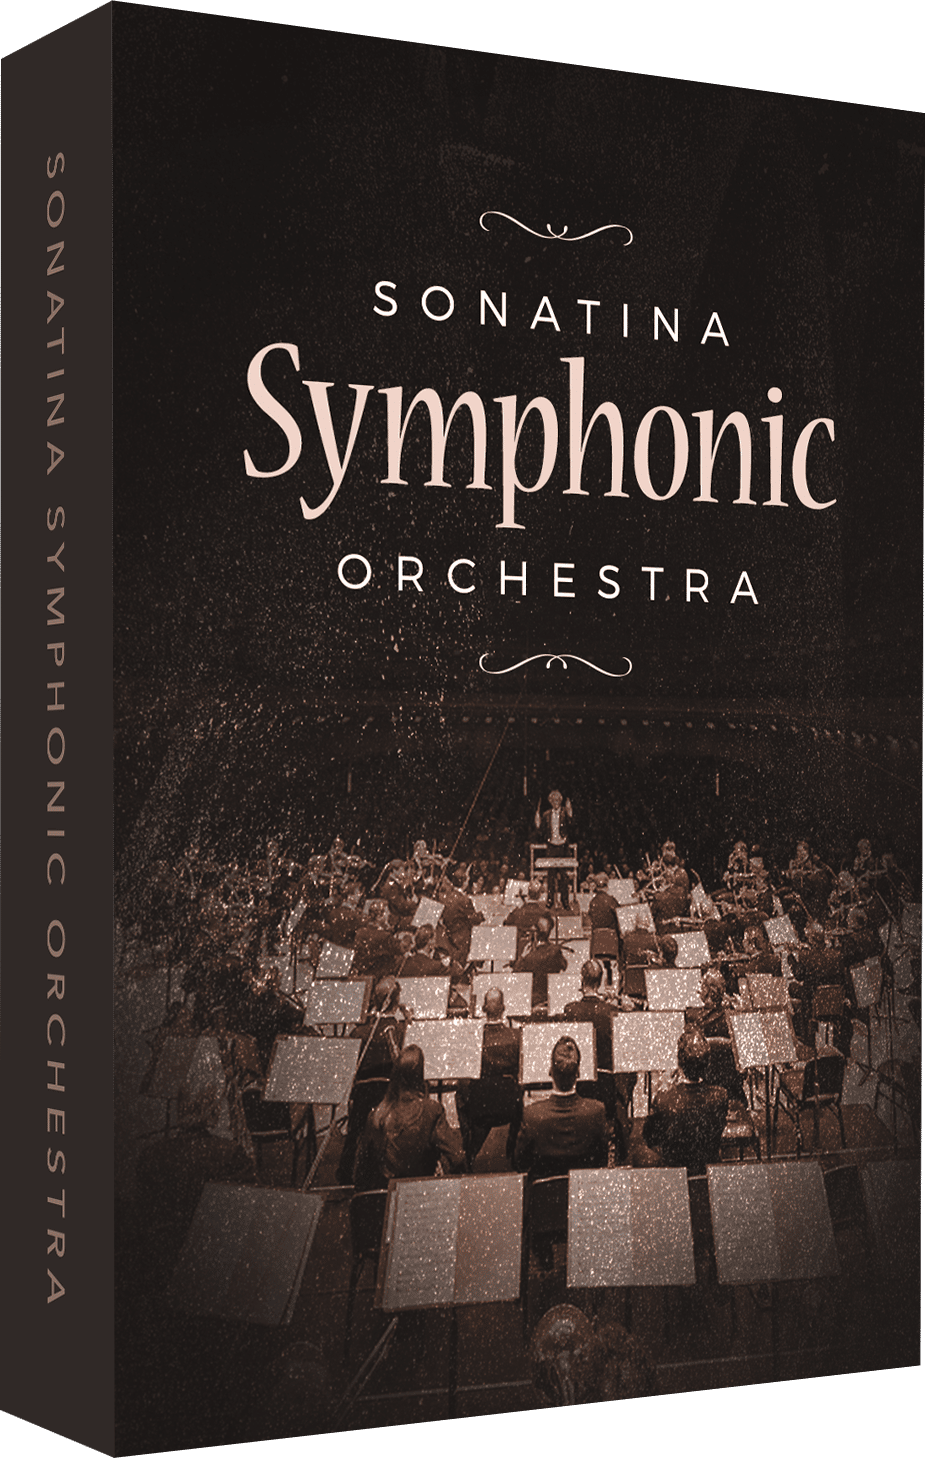 Sonatina Symphonic Orchestra (Sound Module)